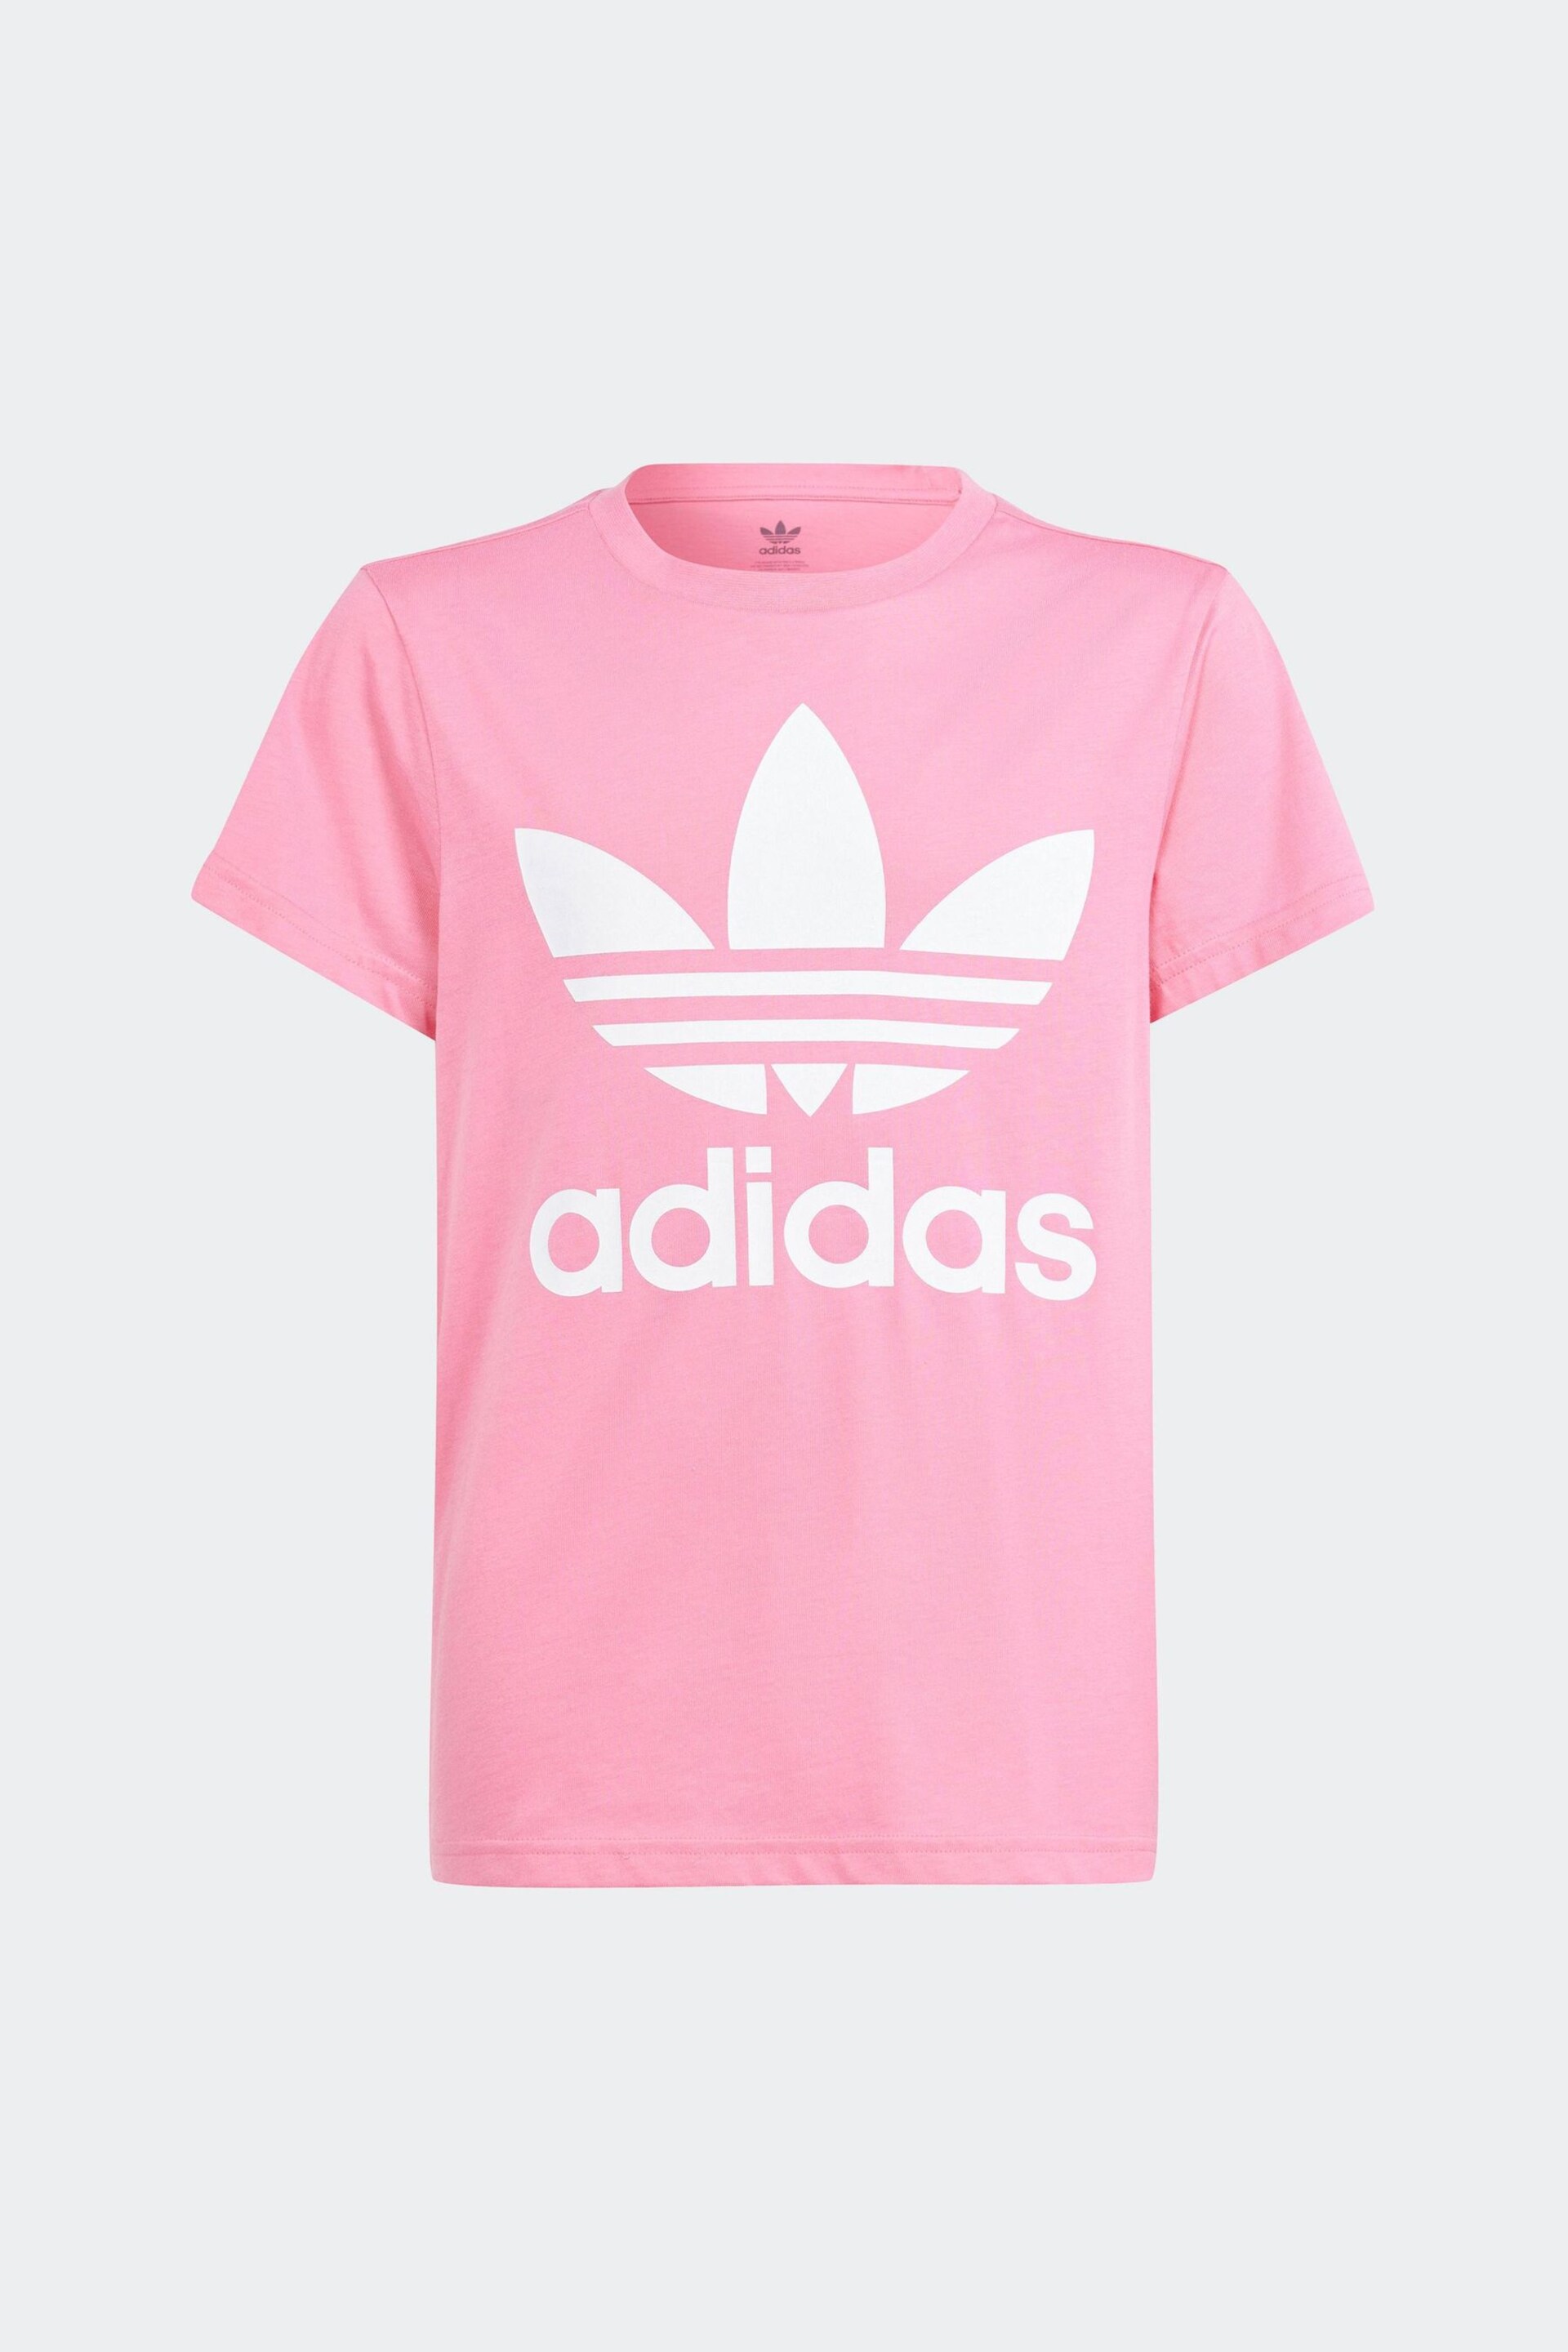 adidas Originals Pink Trefoil T-Shirt - Image 1 of 5